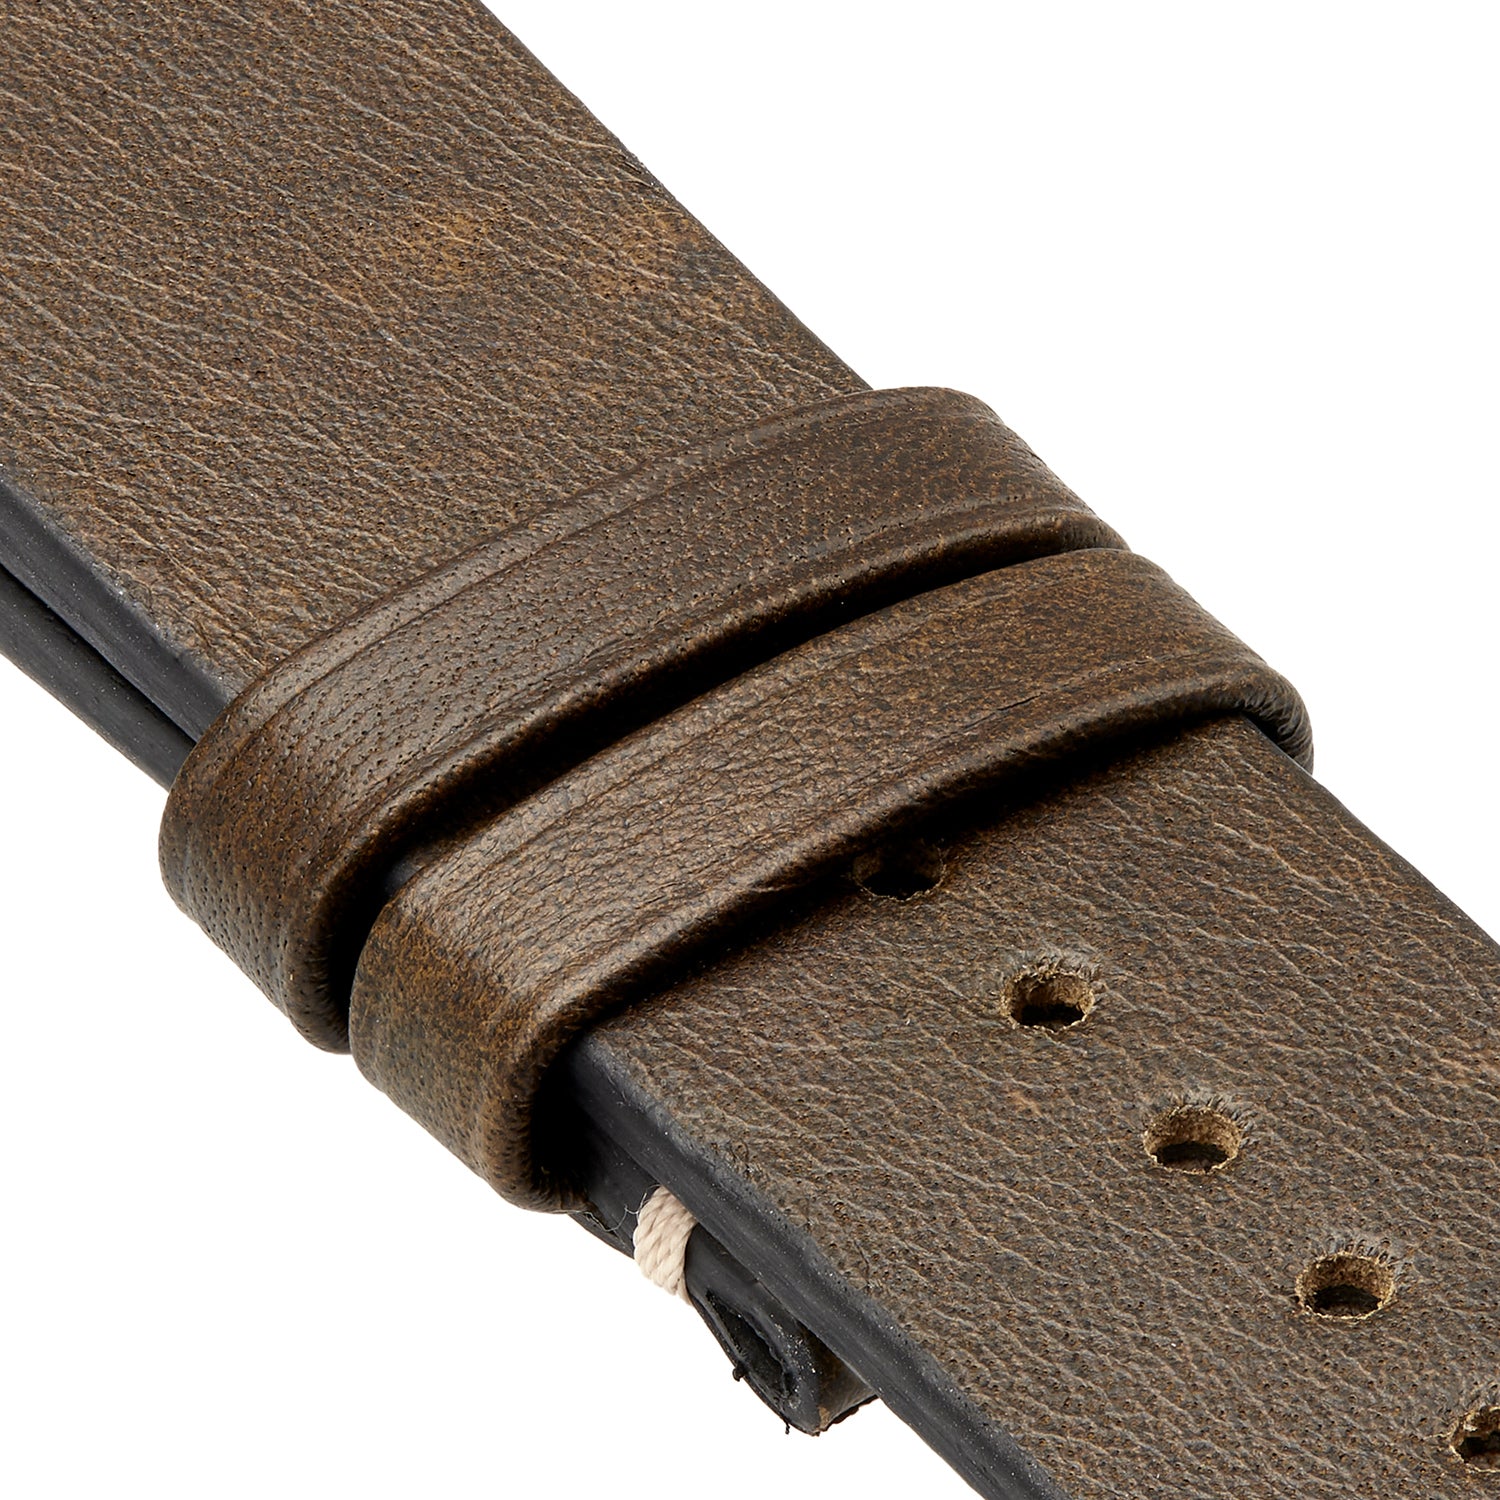 Khaki Leather Side Stitch Strap